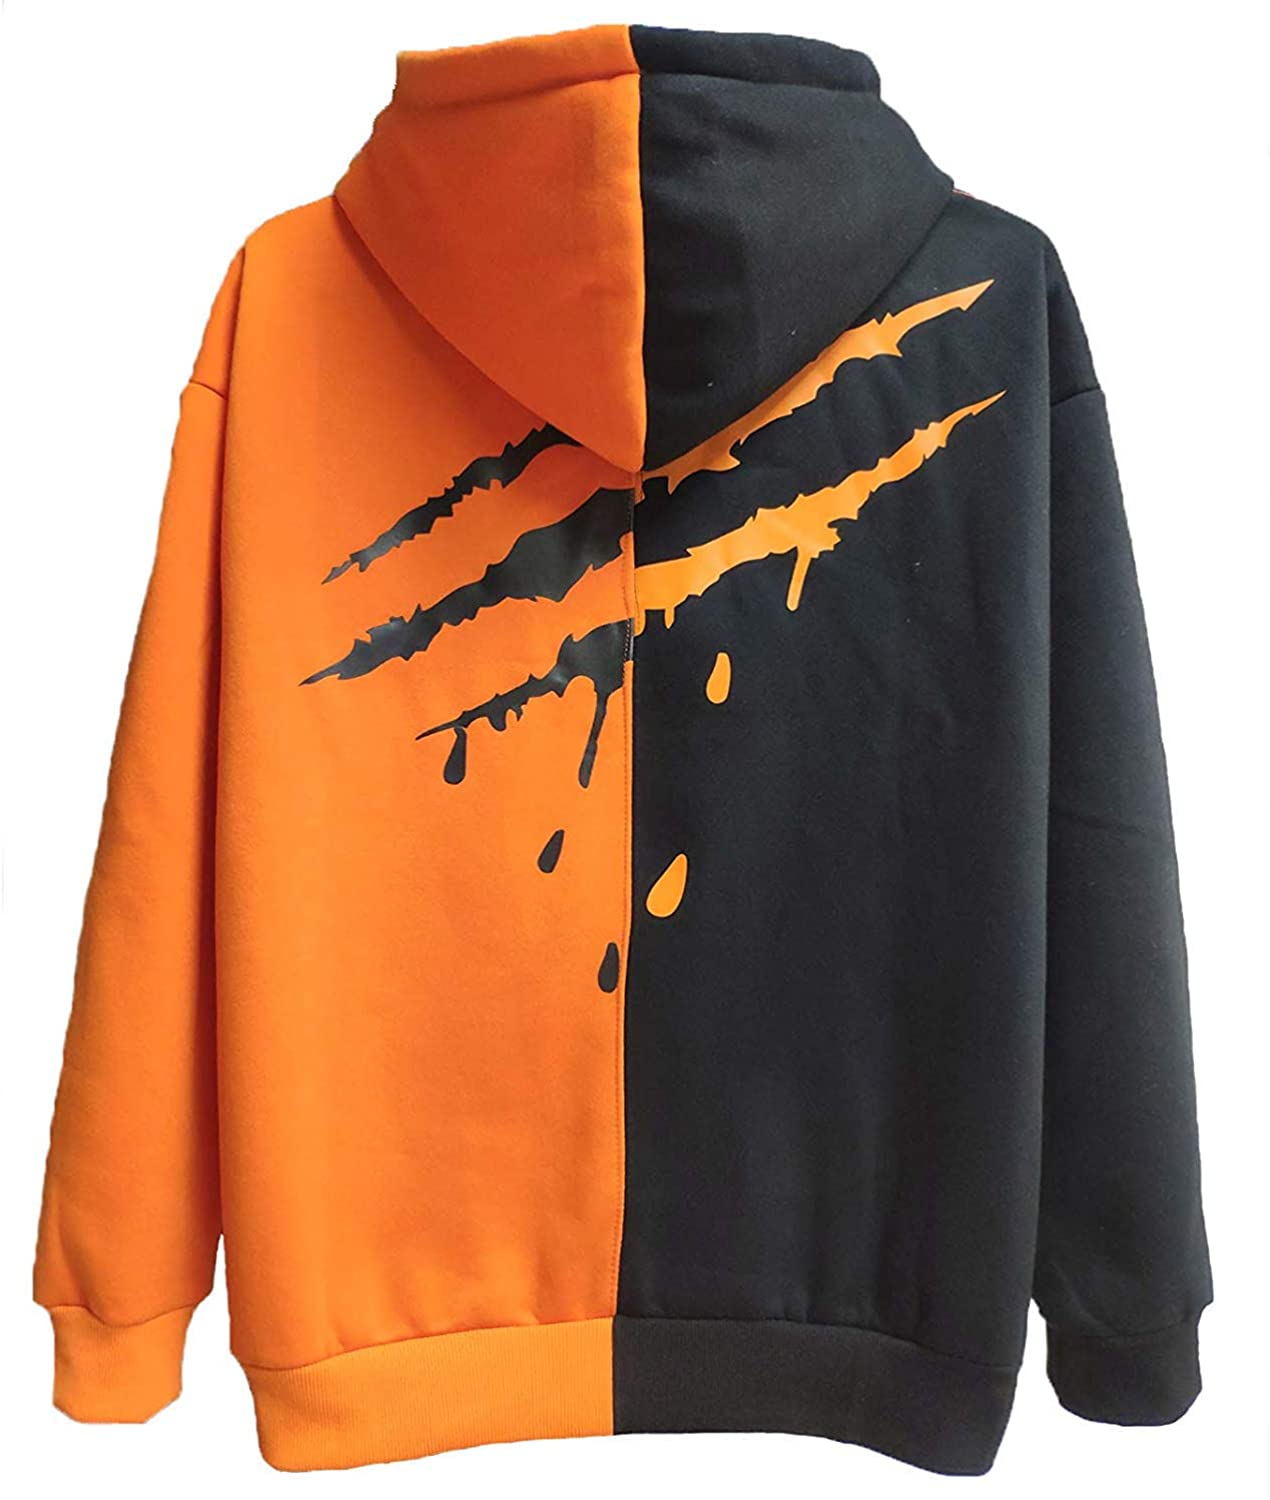 XIAOYAO Men‘s Sweatshirt Hoodies Top Blouse Tracksuits Long Sleeve Autumn Winter Casual